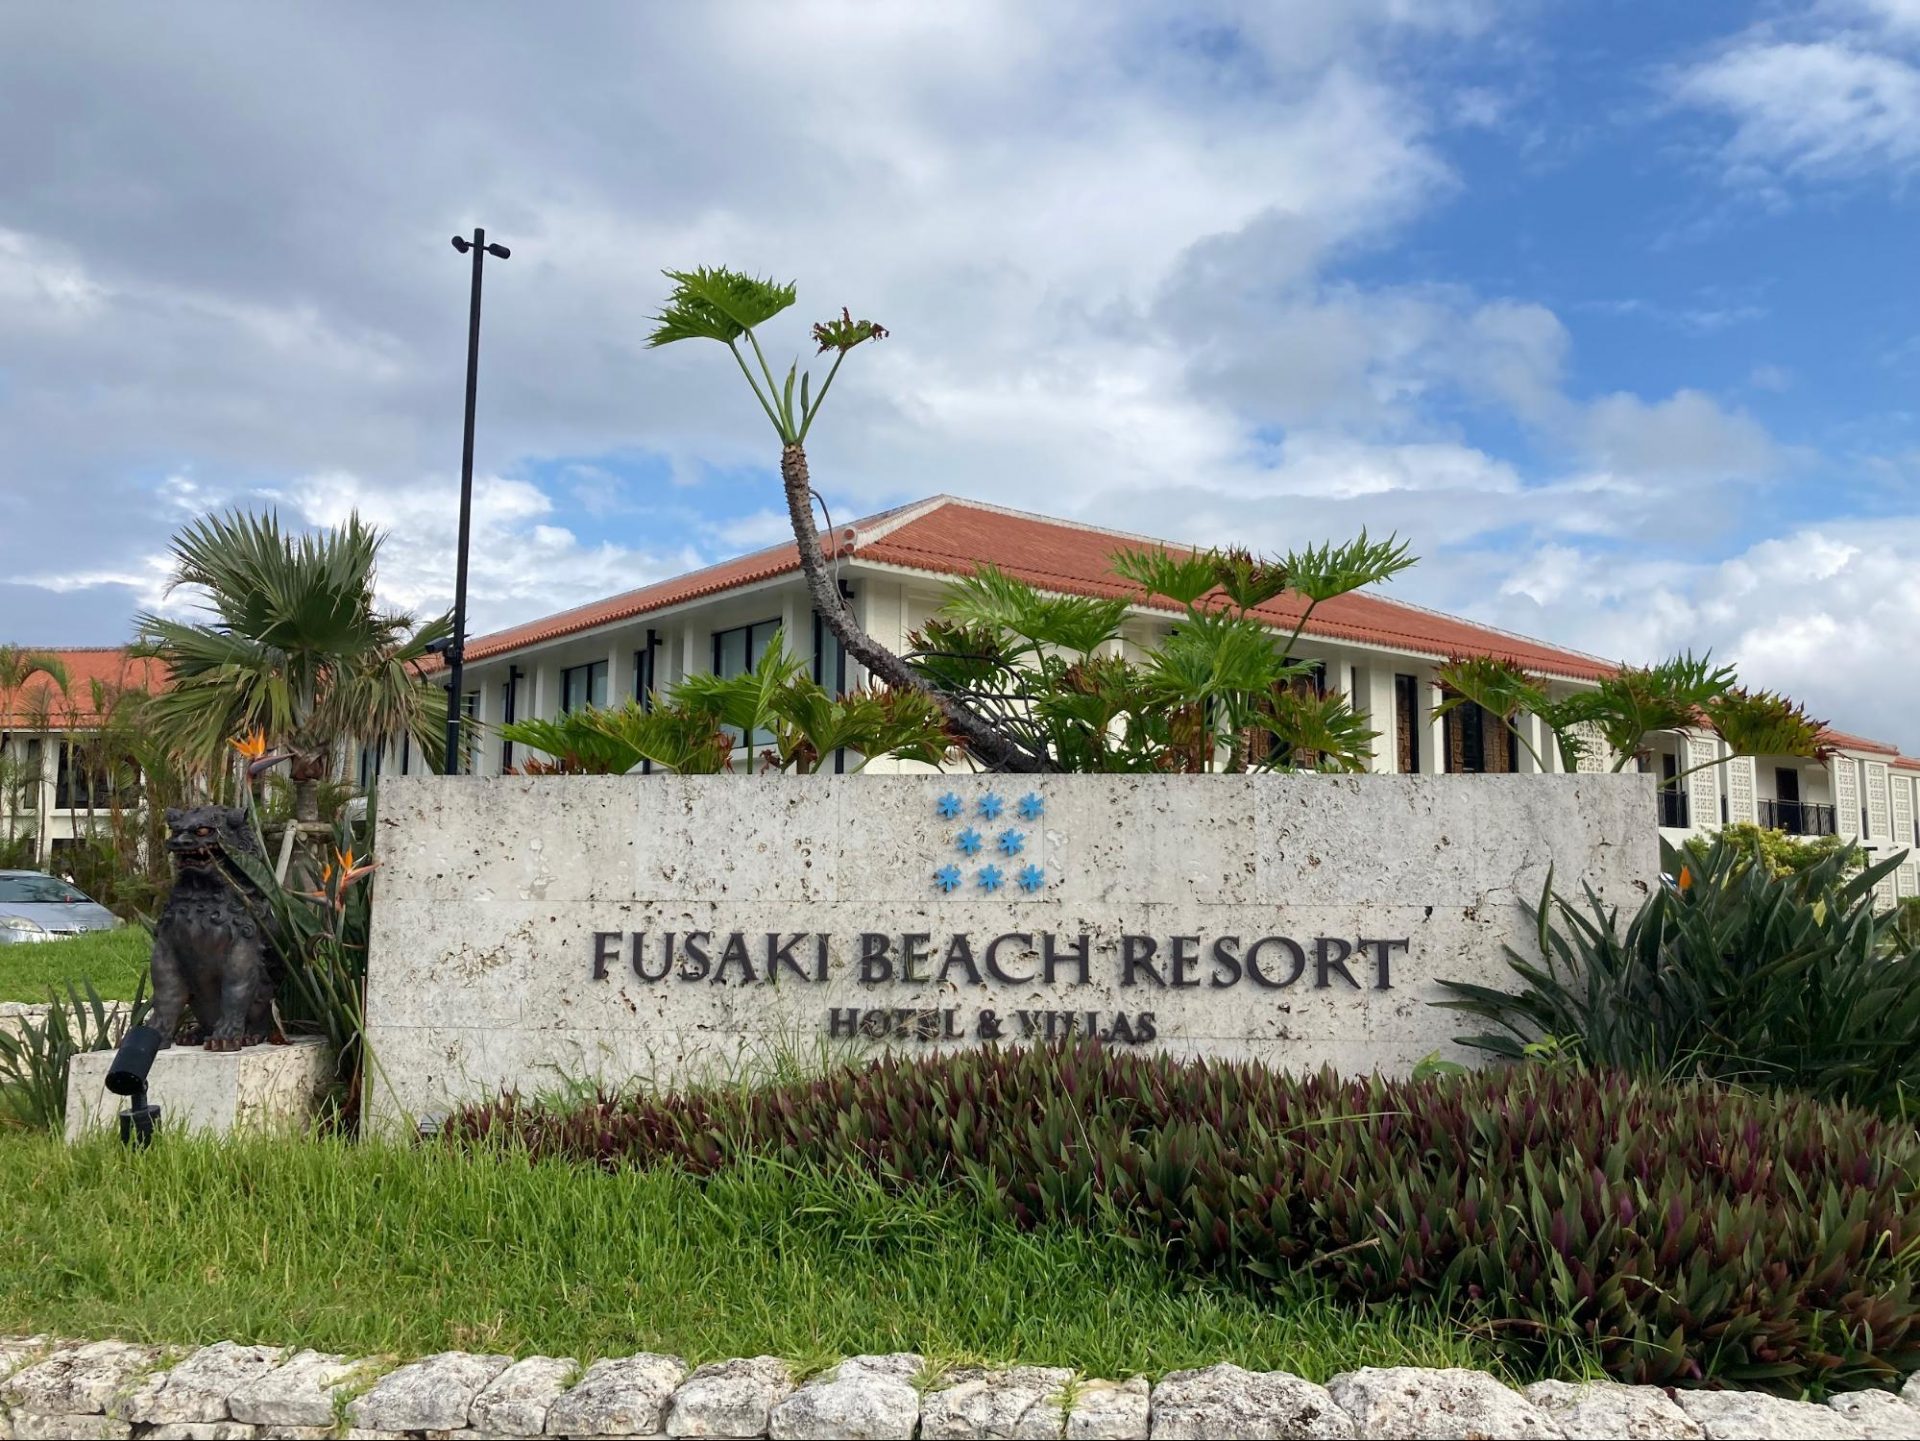 FUSAKI BEACH RESORT HOTEL & VILLAS　フサキ ビーチ リゾート ホテル＆ヴィラズ 石垣島　旅行　観光　宿